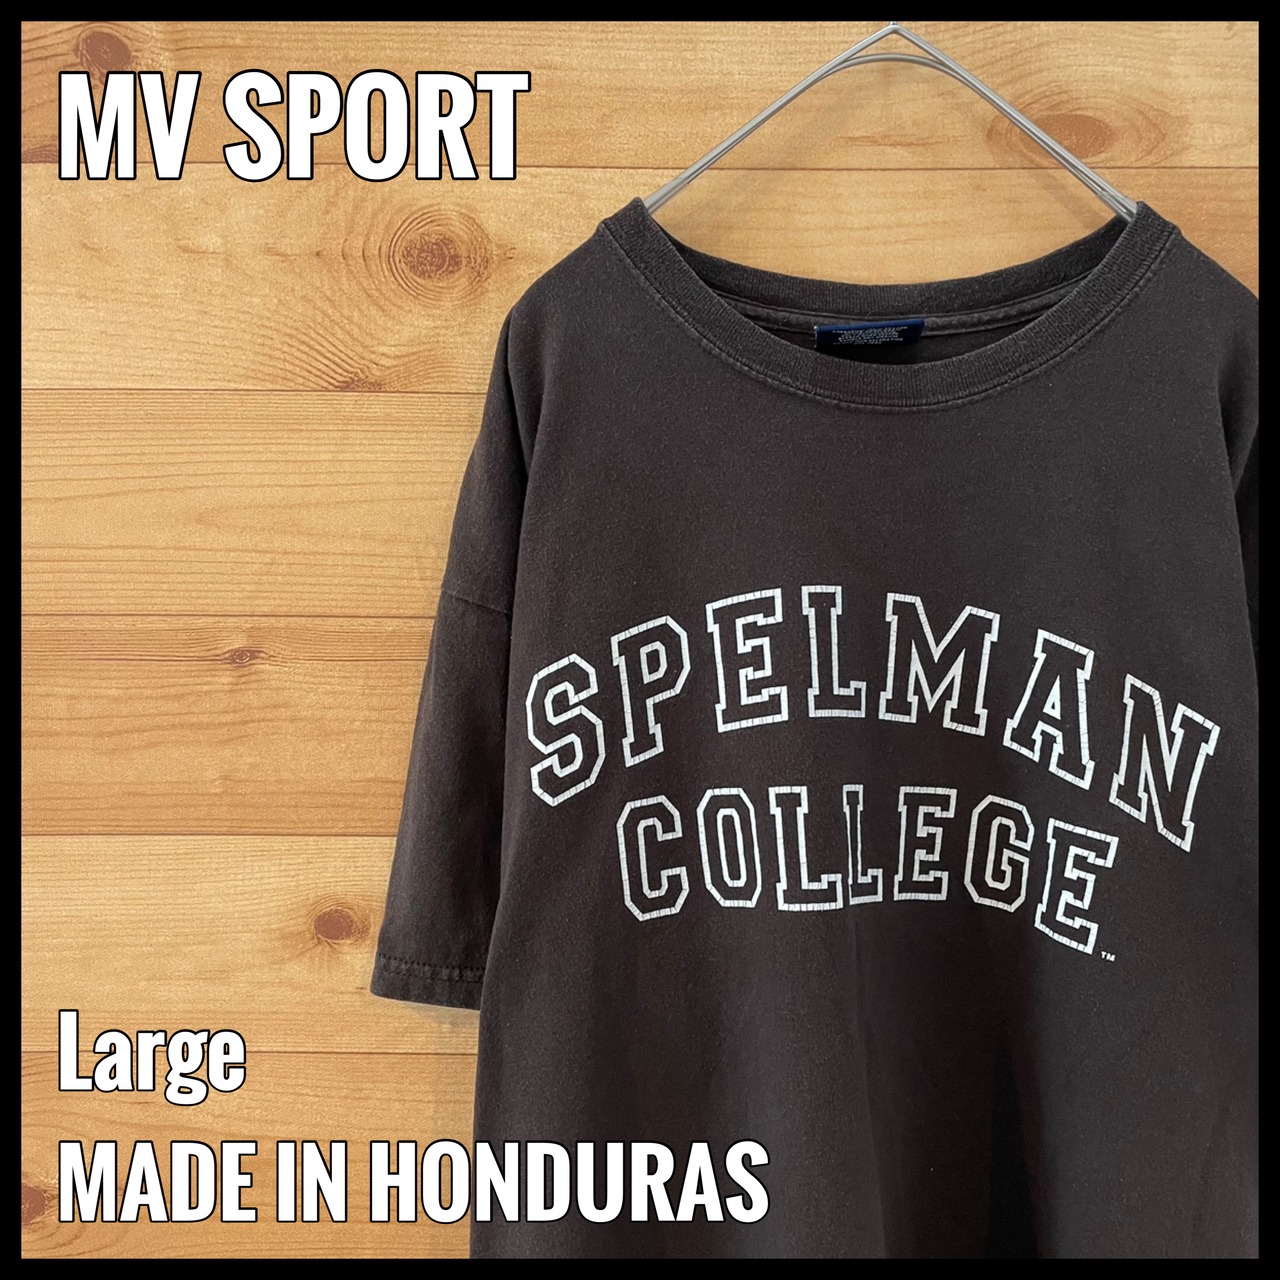 【MVSPORT】カレッジ スペルマン大学 アーチロゴ Tシャツ spelman college L US古着